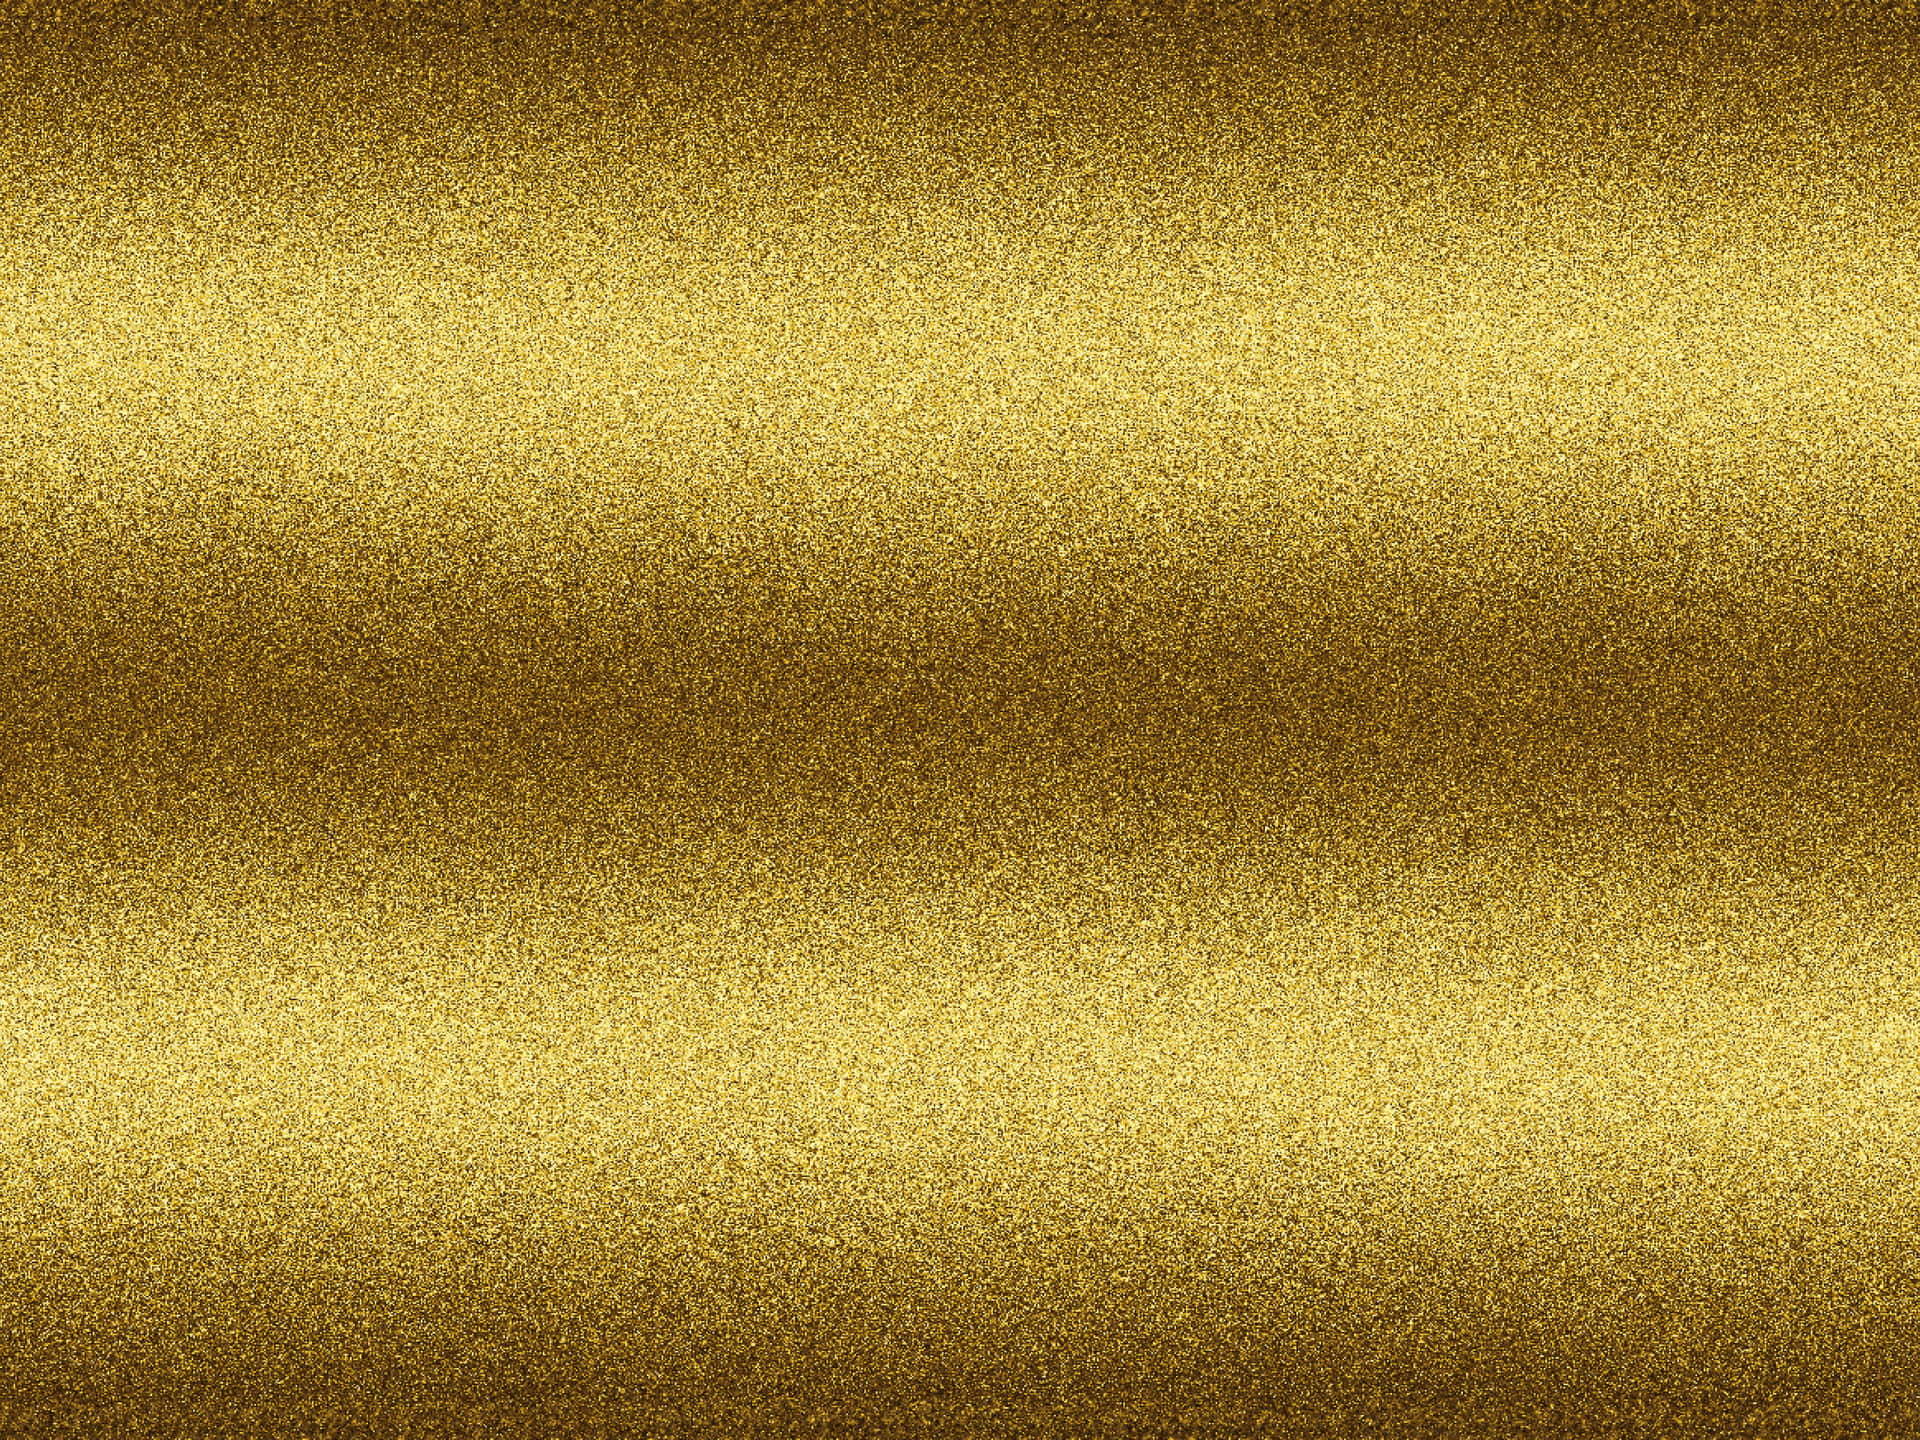 Золотистый металлик. RAL 1036 золотой металлик. Золото металлик d2111. Золото металлик lx19240. Золото текстура.